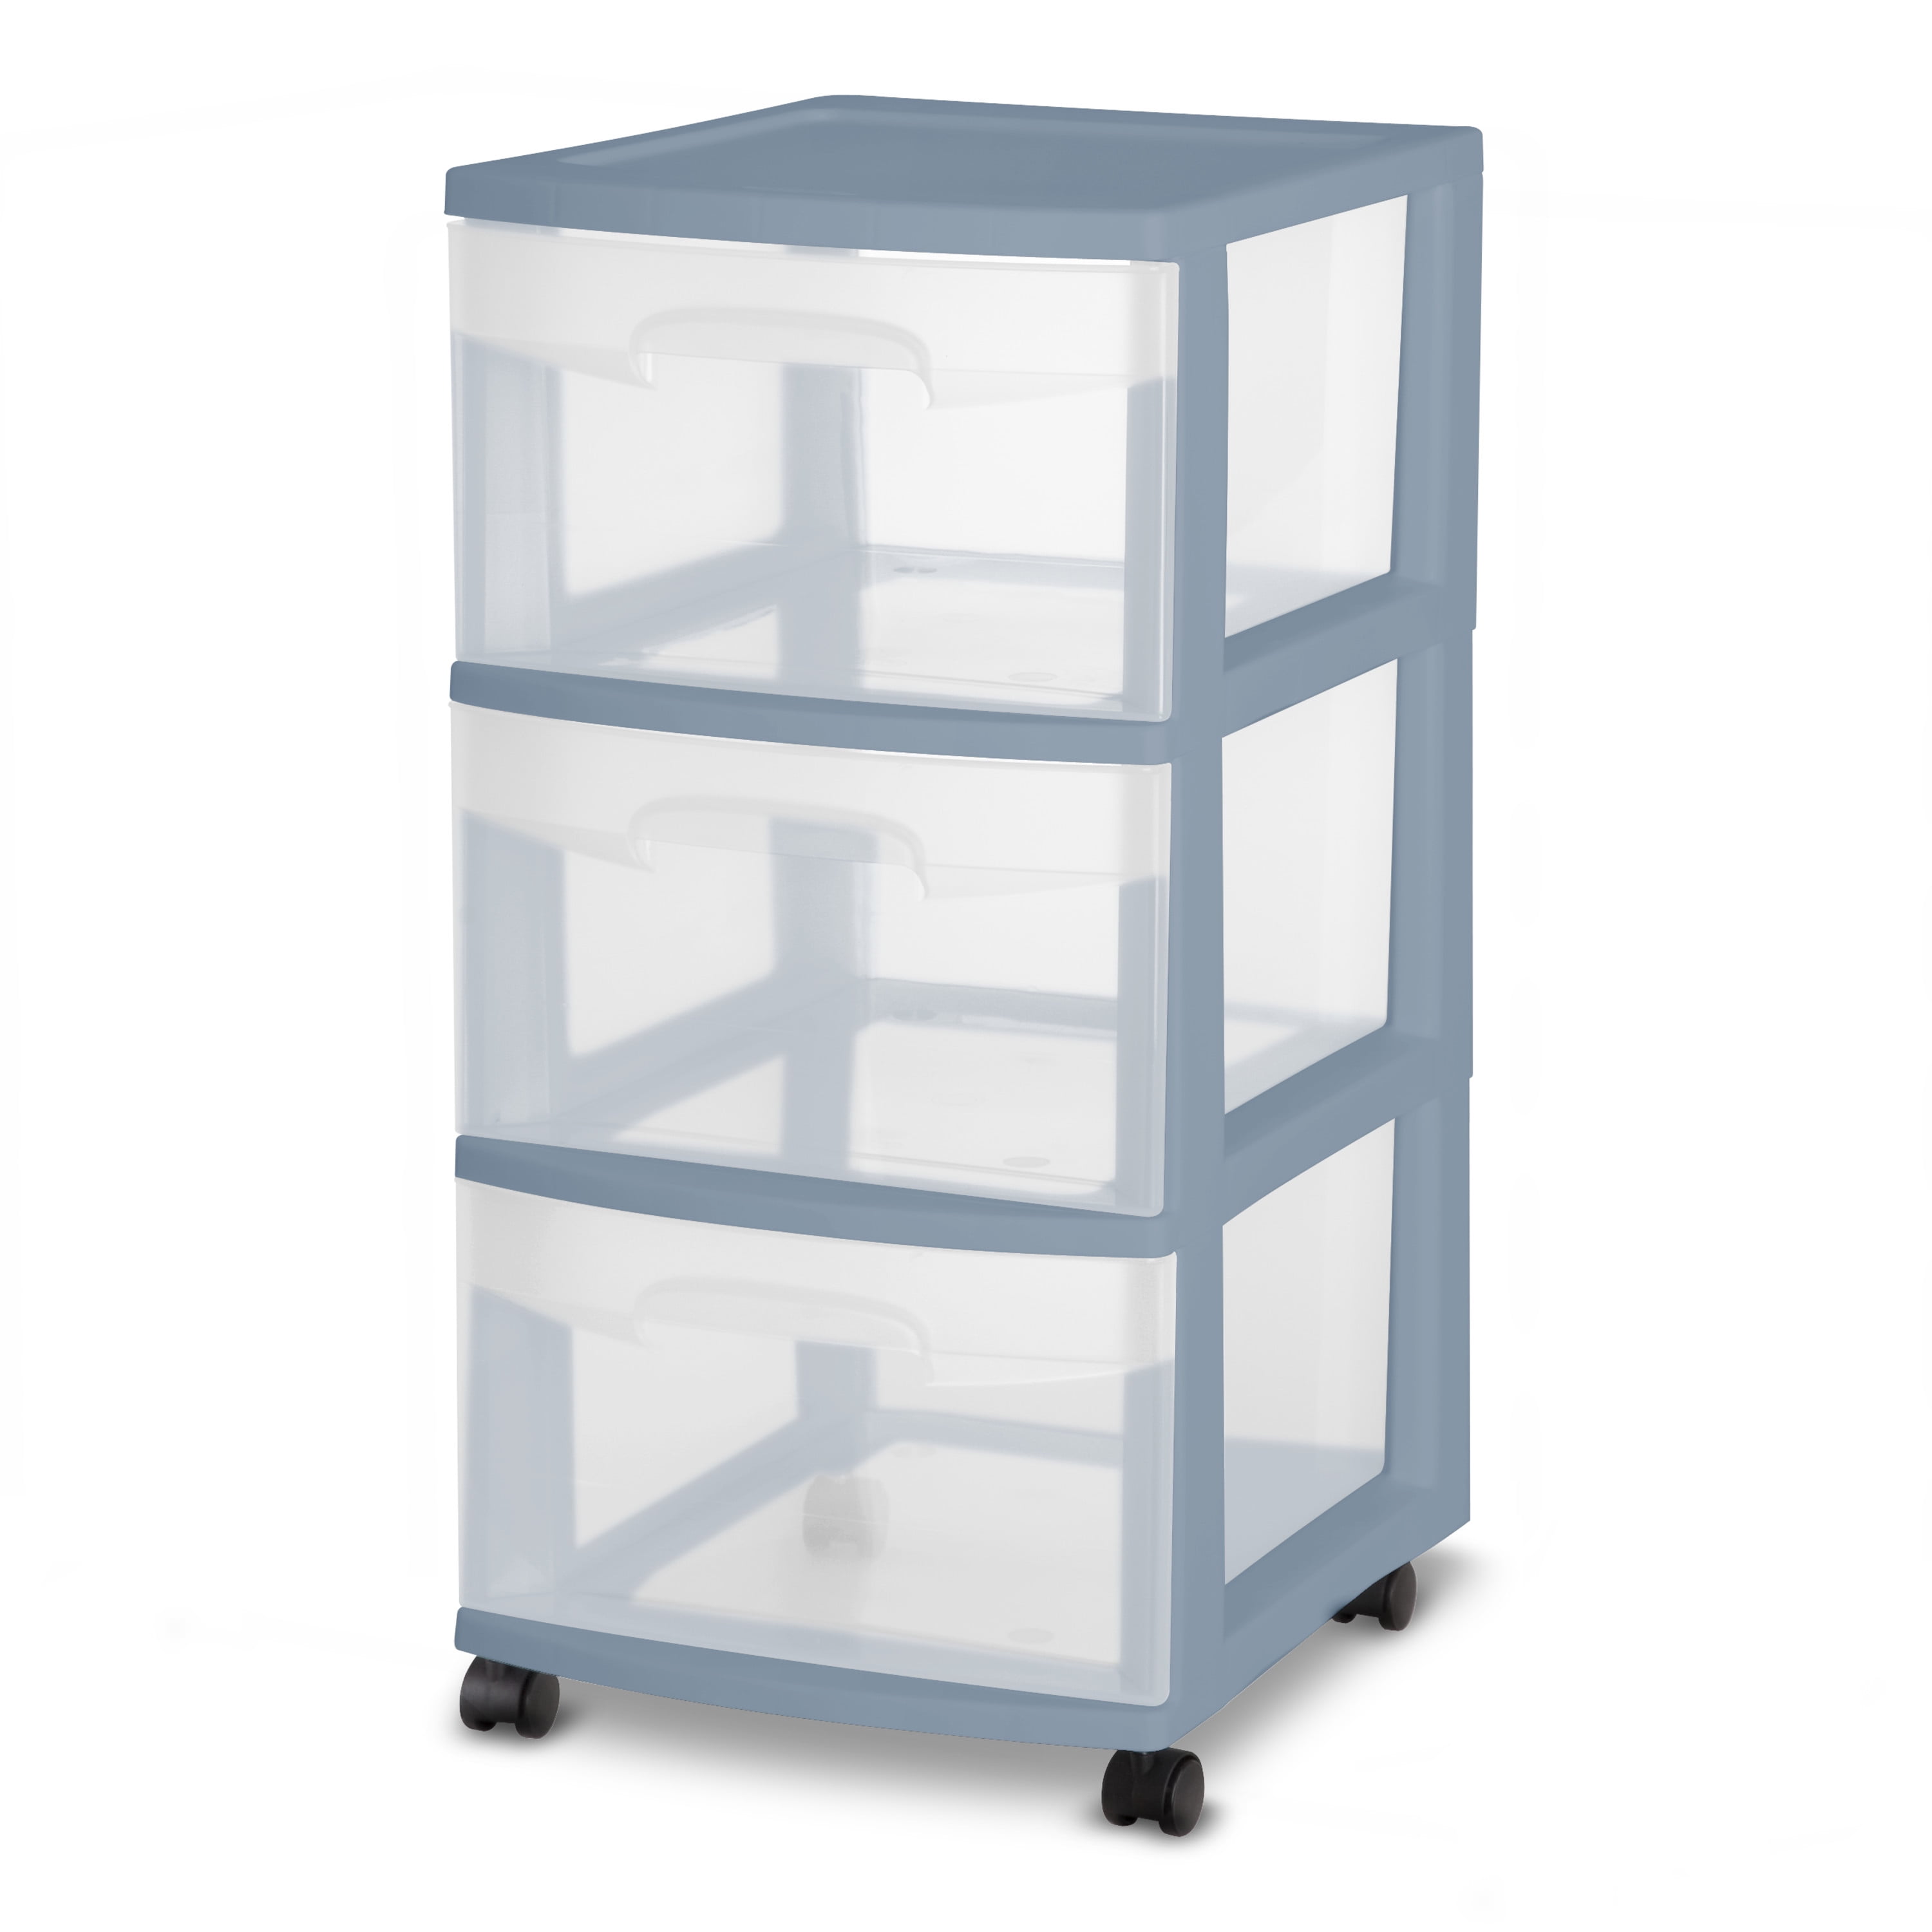 Sterilite 3 Drawer Cart Washed Blue, 3 Drawer Storage Cart With Wheels